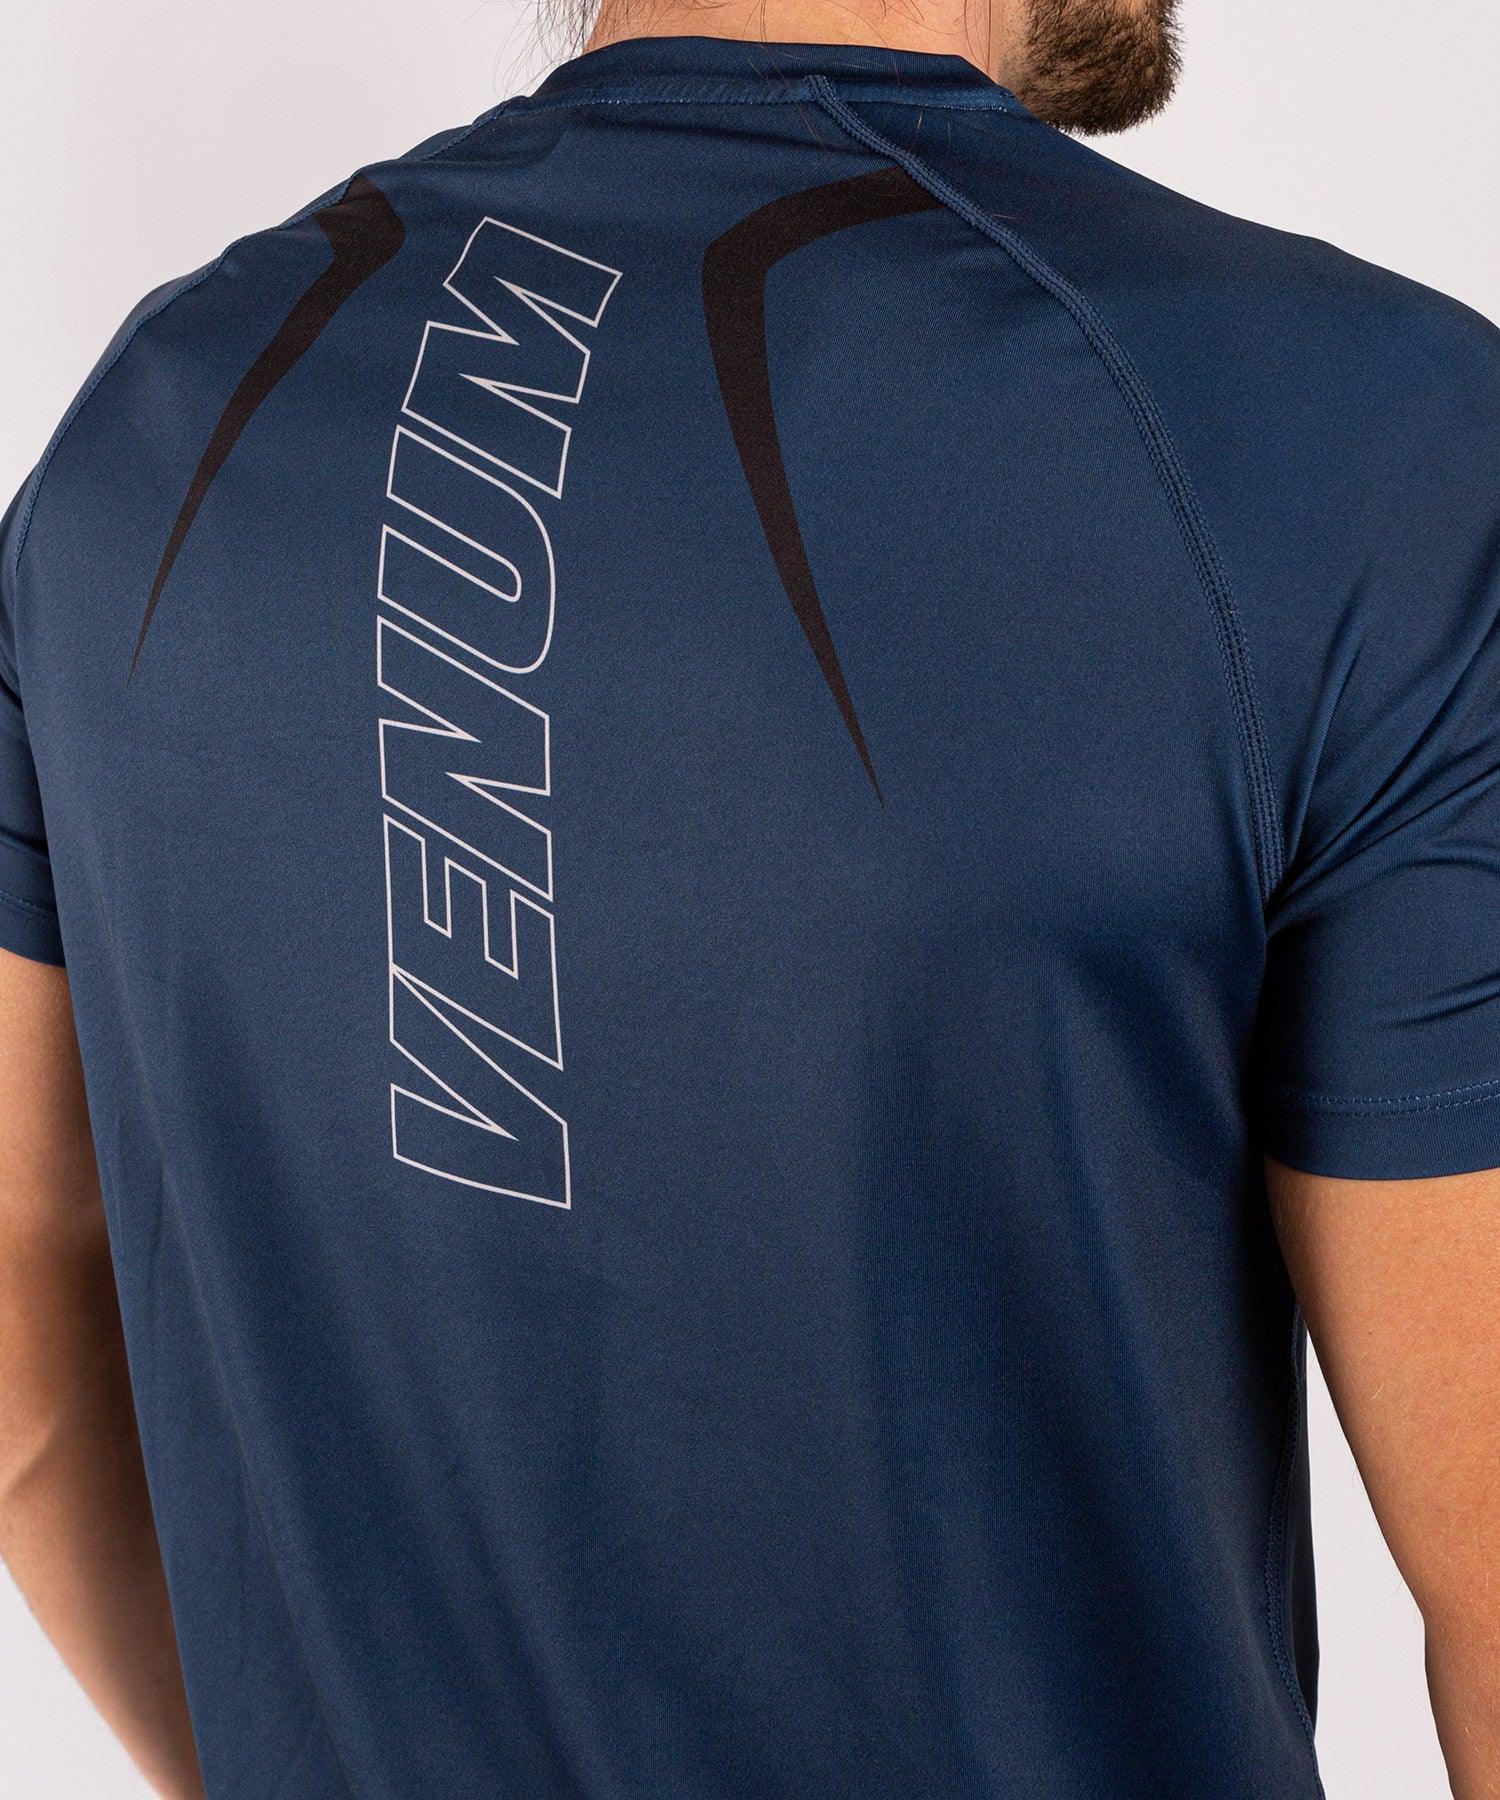 Venum Contender 5.0 Dry-Tech T-shirt - Navy/Sand Picture 9